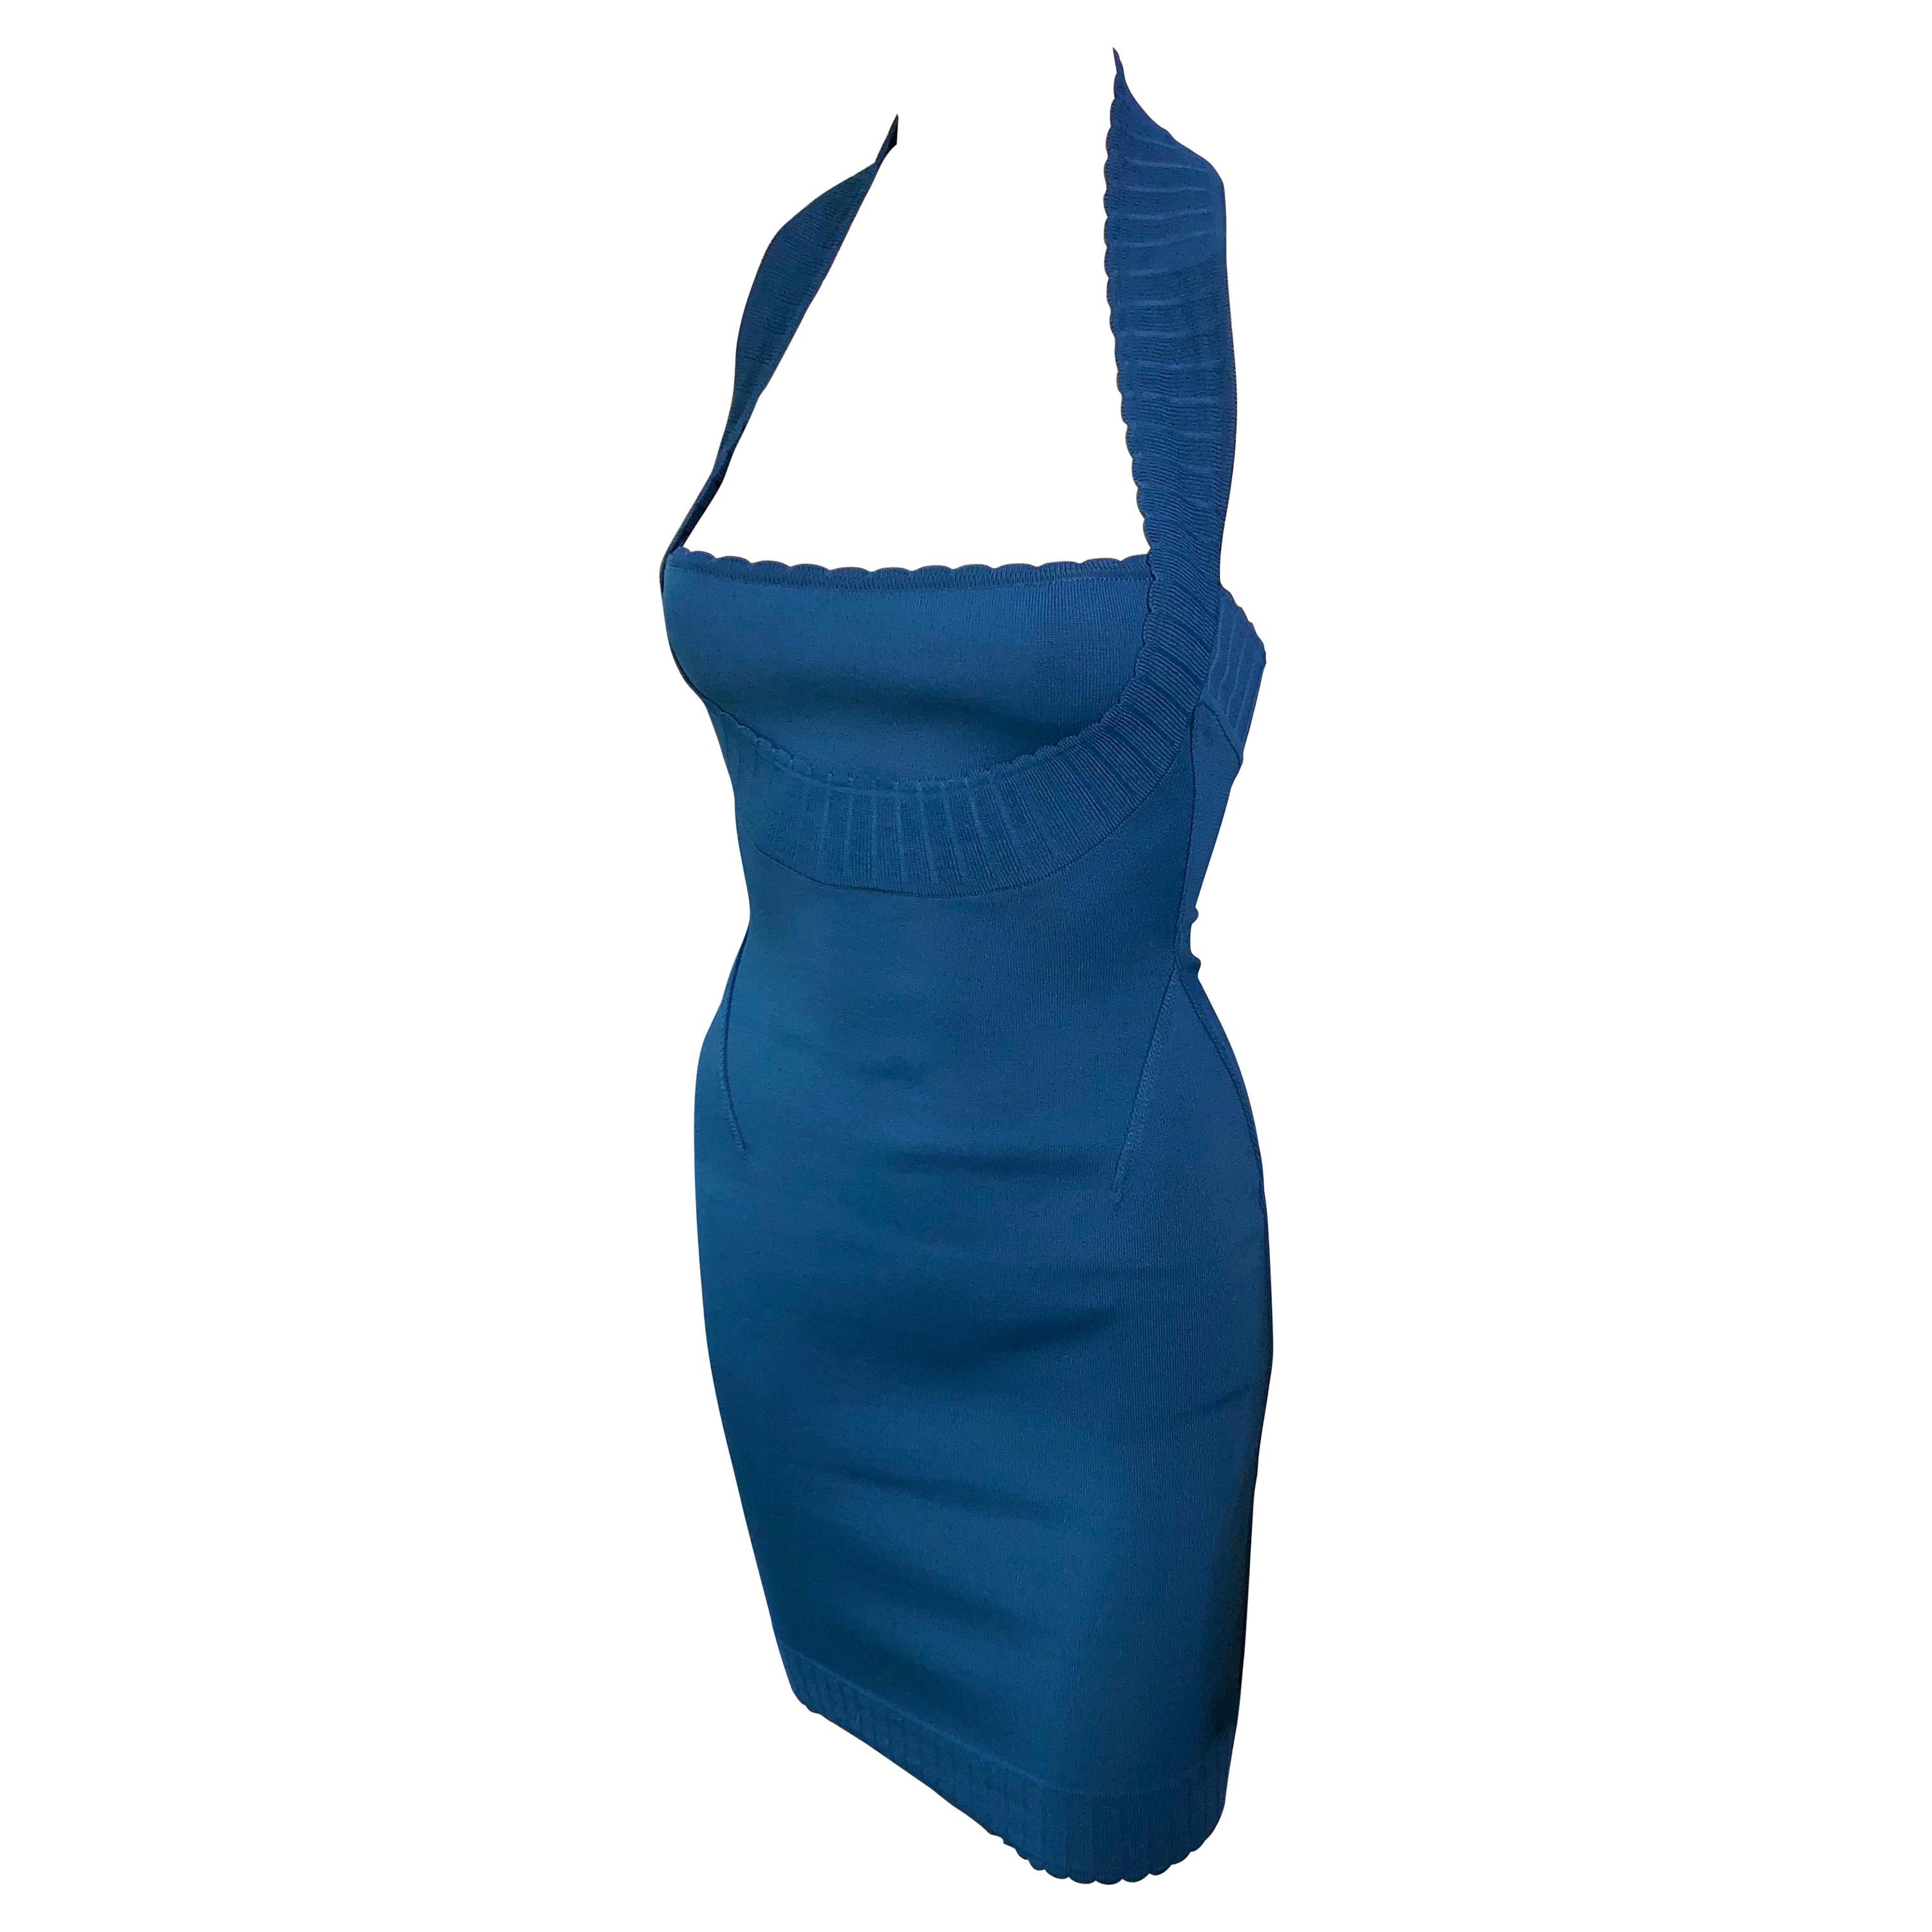 Azzedine Alaia S/S 1992 Vintage Bustier Open Back Bodycon Blue Dress 